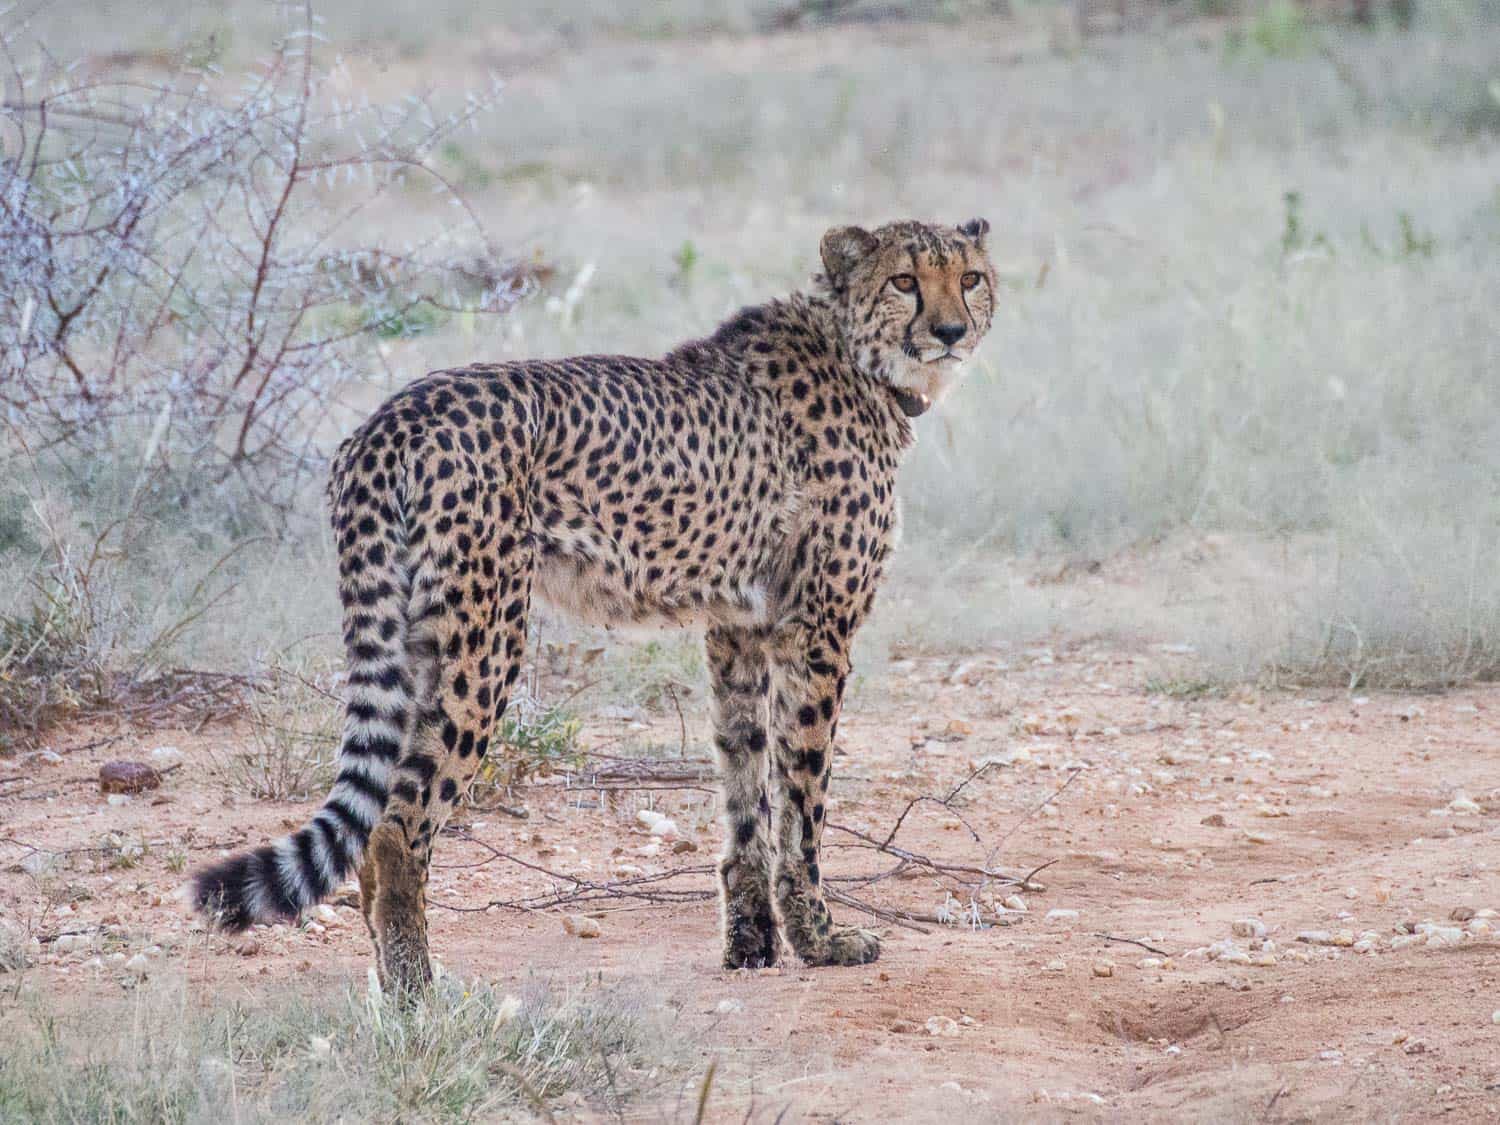 A cheetah at Okonjima Nature Reserve, Namibia